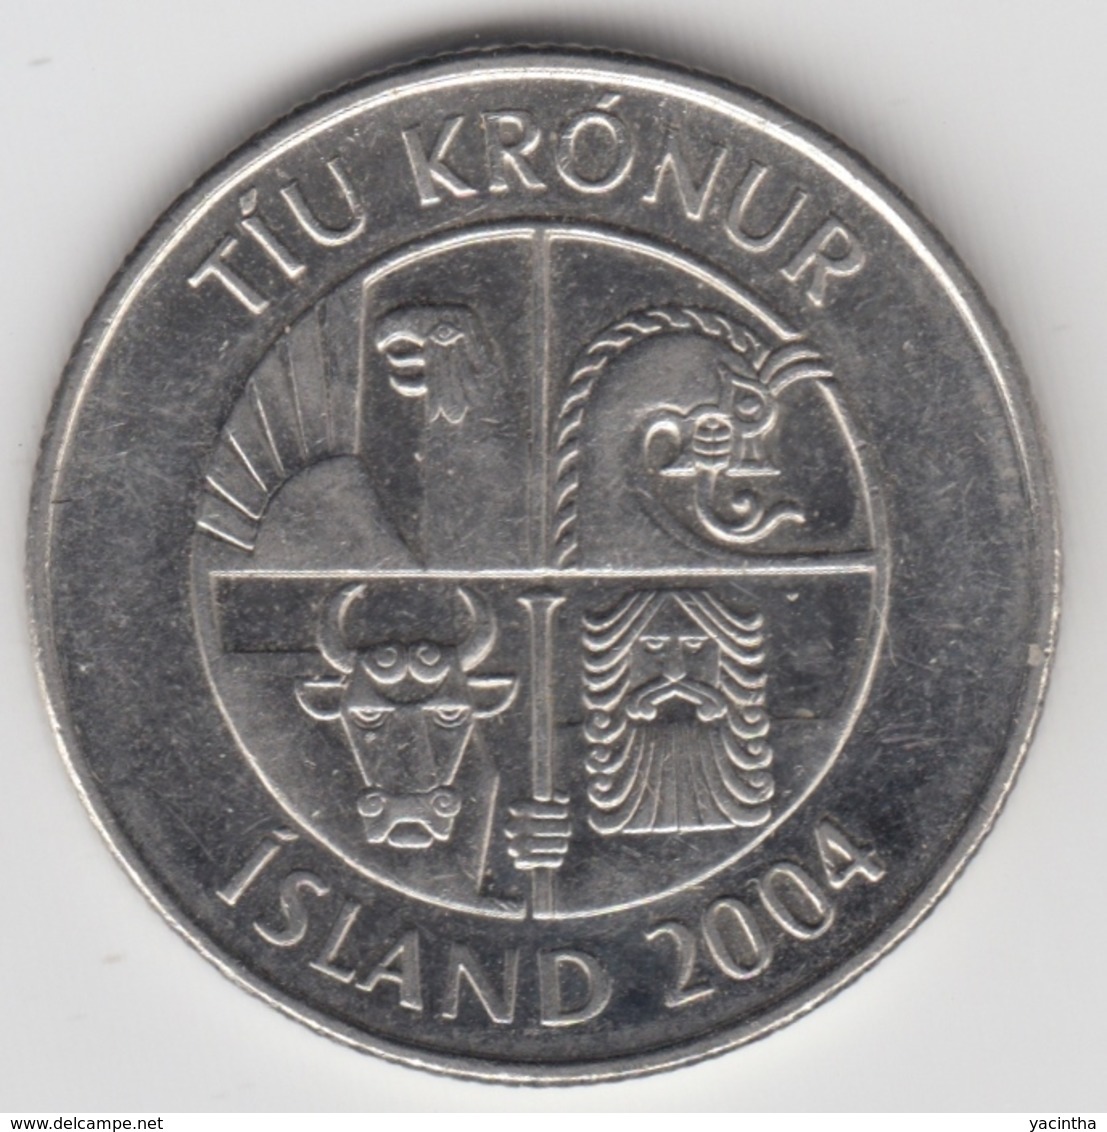 @Y@  IJSLAND  / ISLAND  10 Kroner   2004    (1421) - IJsland